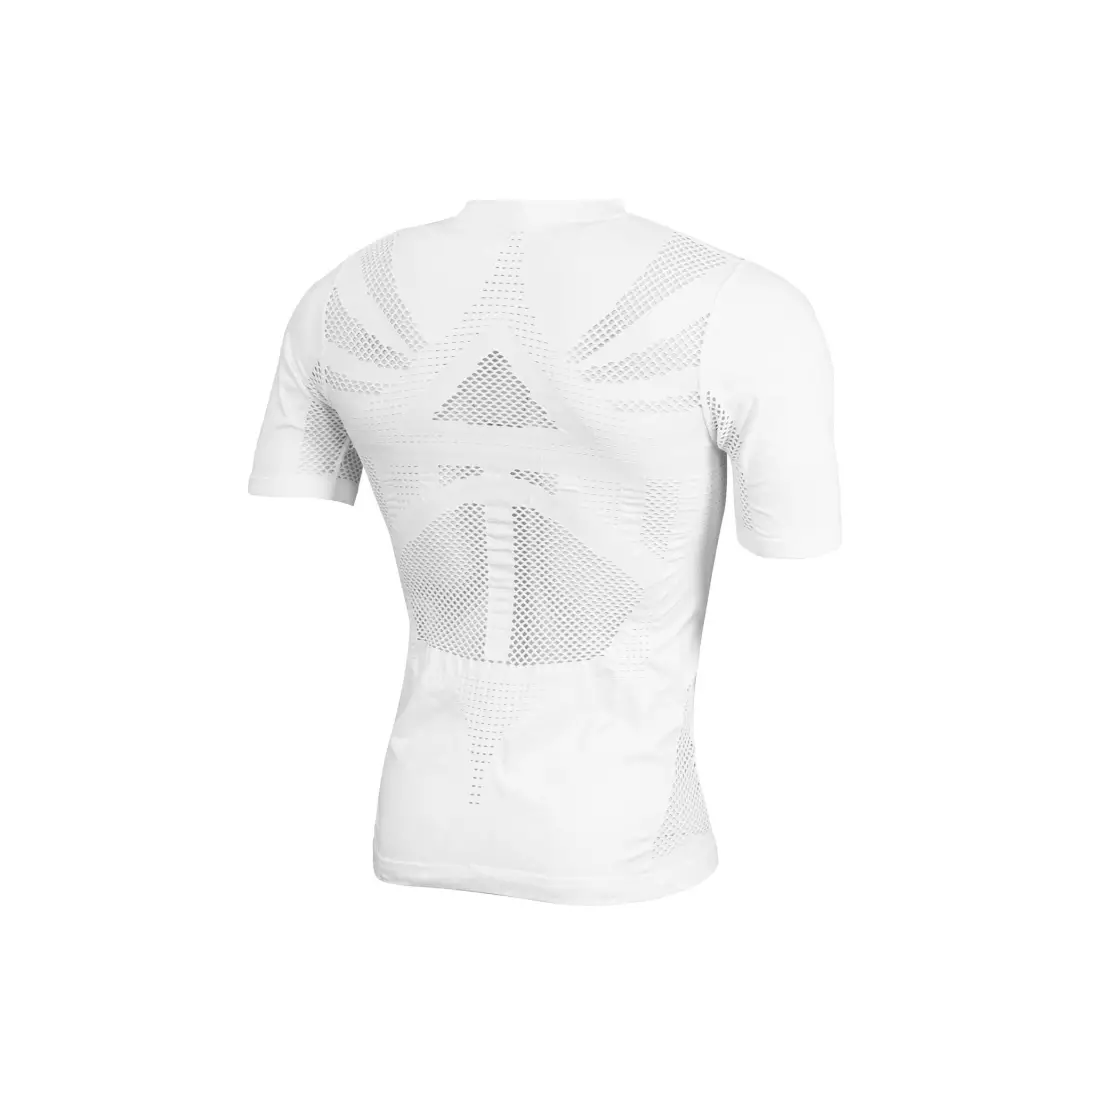 FORCE HOT light sweatshirt, short sleeves - white 903405